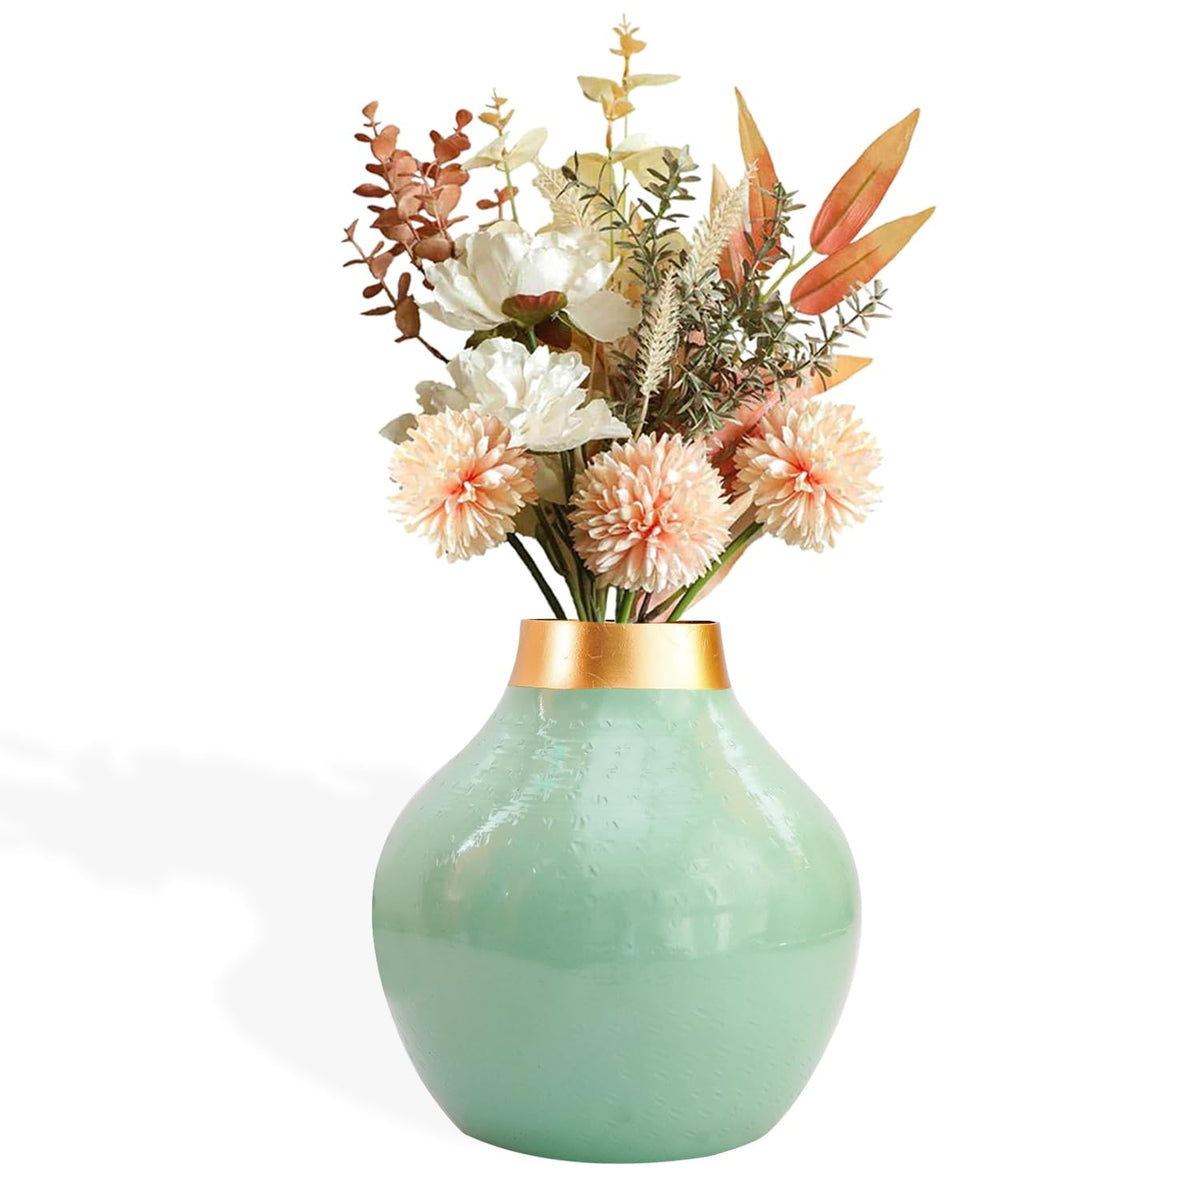 Ekhasa Unbreakable Metallic Aqua Green Flower Vase for Home Decor | Aesthetic Vase Gift for Wedding, Housewarming, Parties, Gatherings | Decorative Metal Vase for Living Room, Dining Table, Office